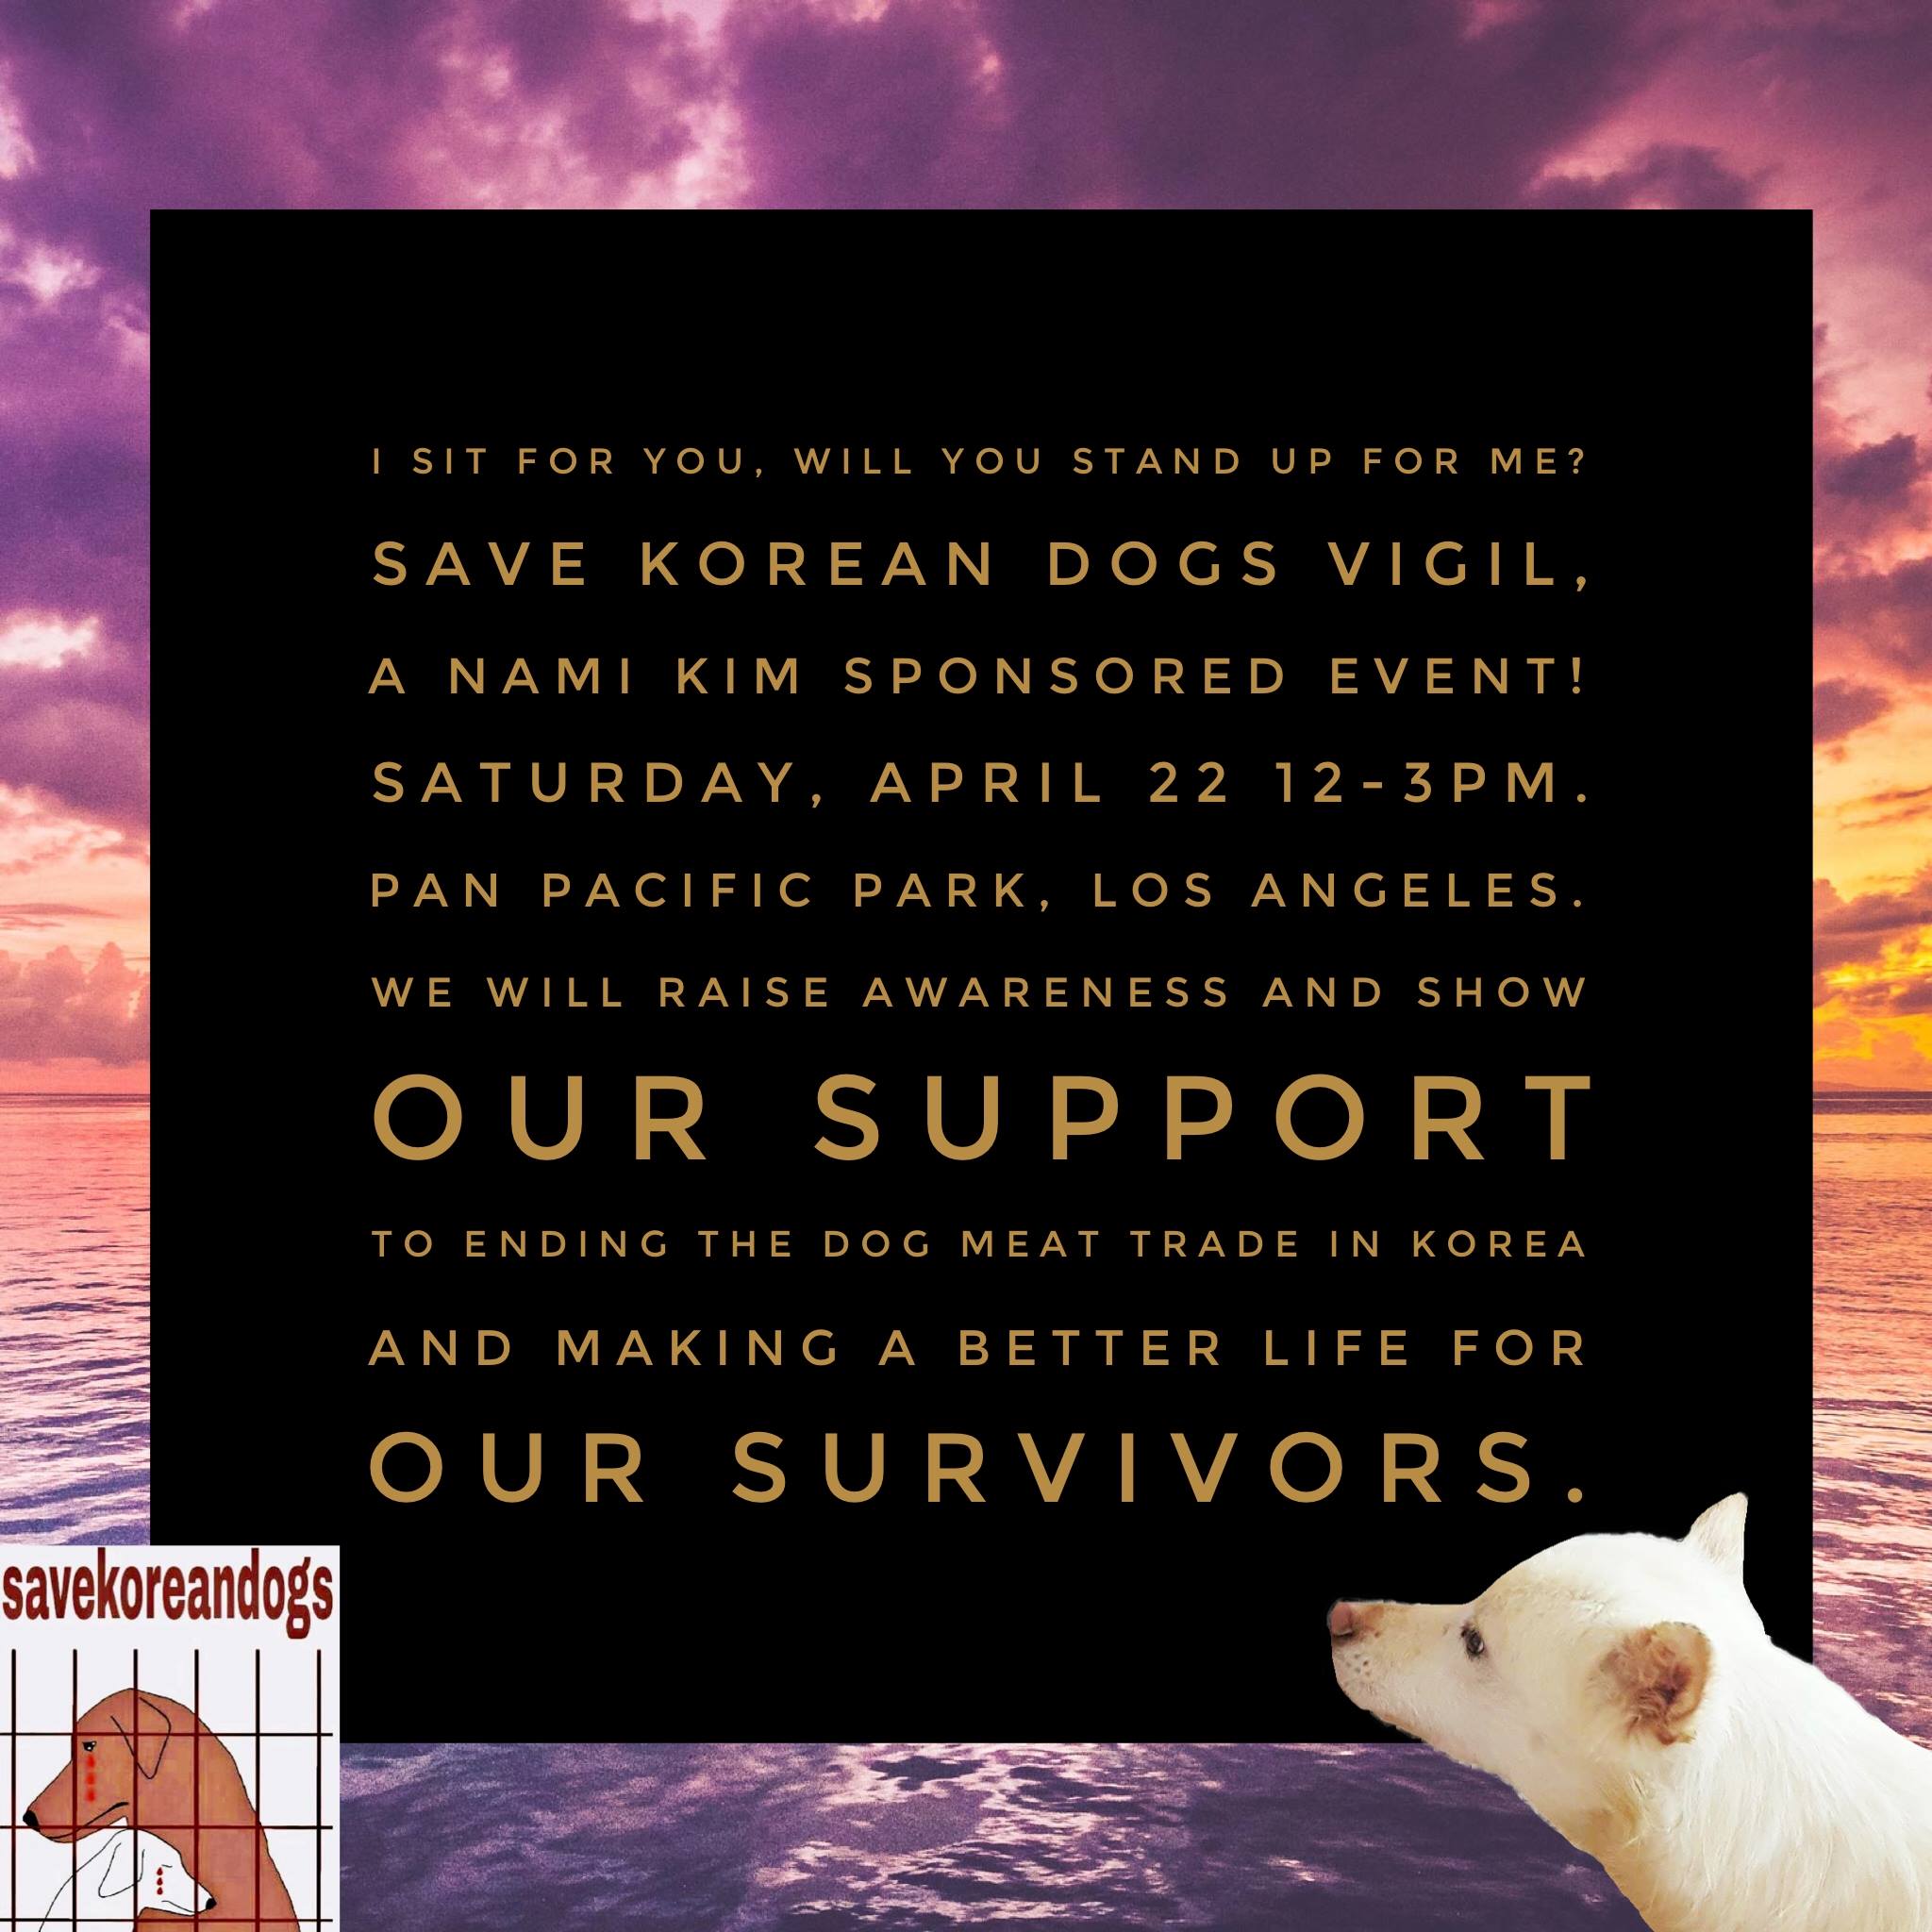 Pan Pacific Park / Save Korean Dogs Vigil